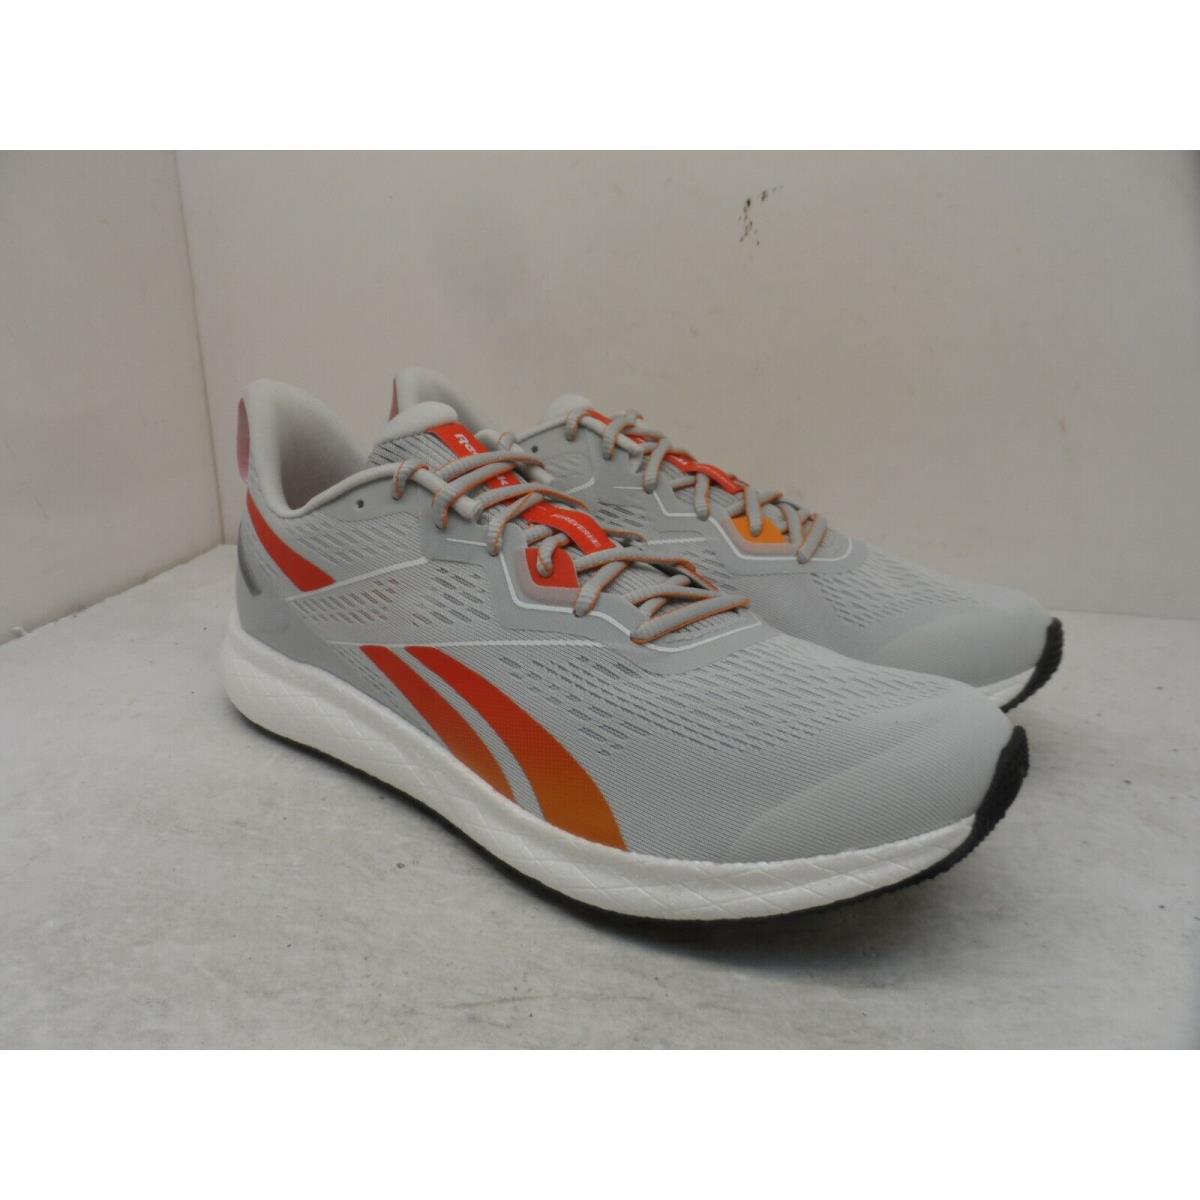 Reebok Men`s Forever Floatride Energy Athletic Sneaker Grey/orange/red Size 9.5M